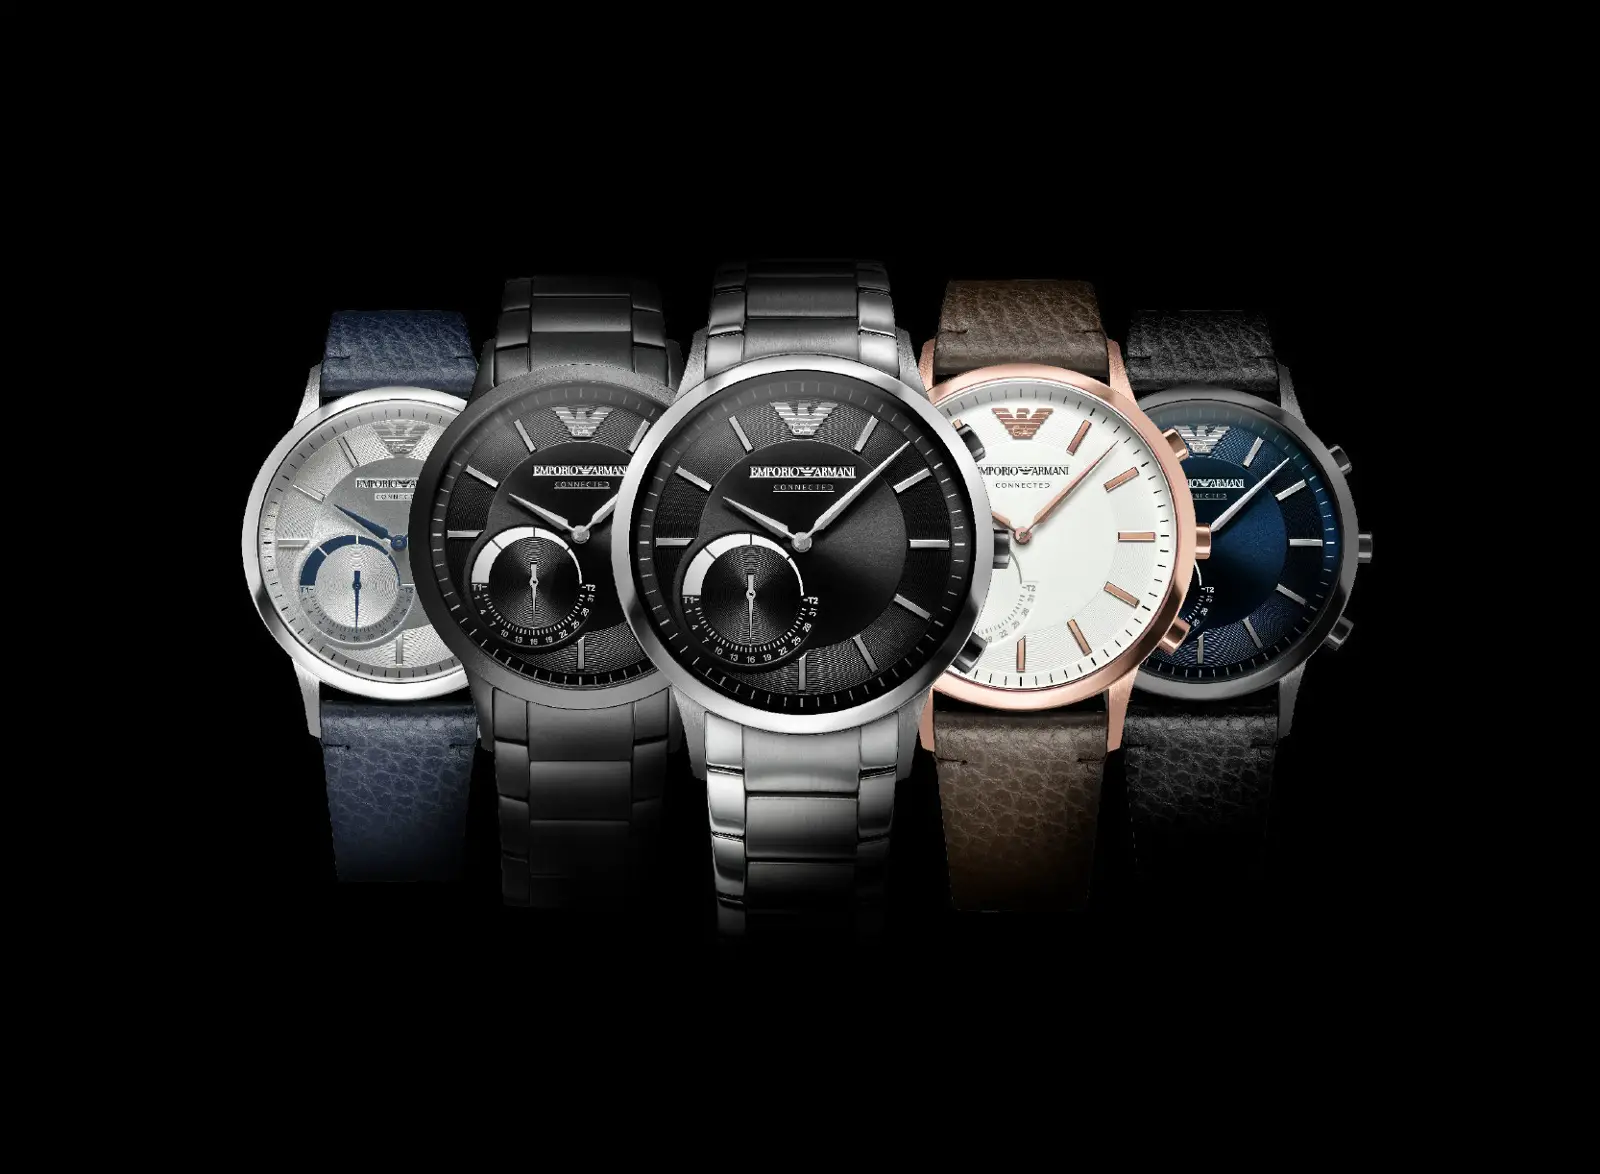 hybrid watch emporio armani